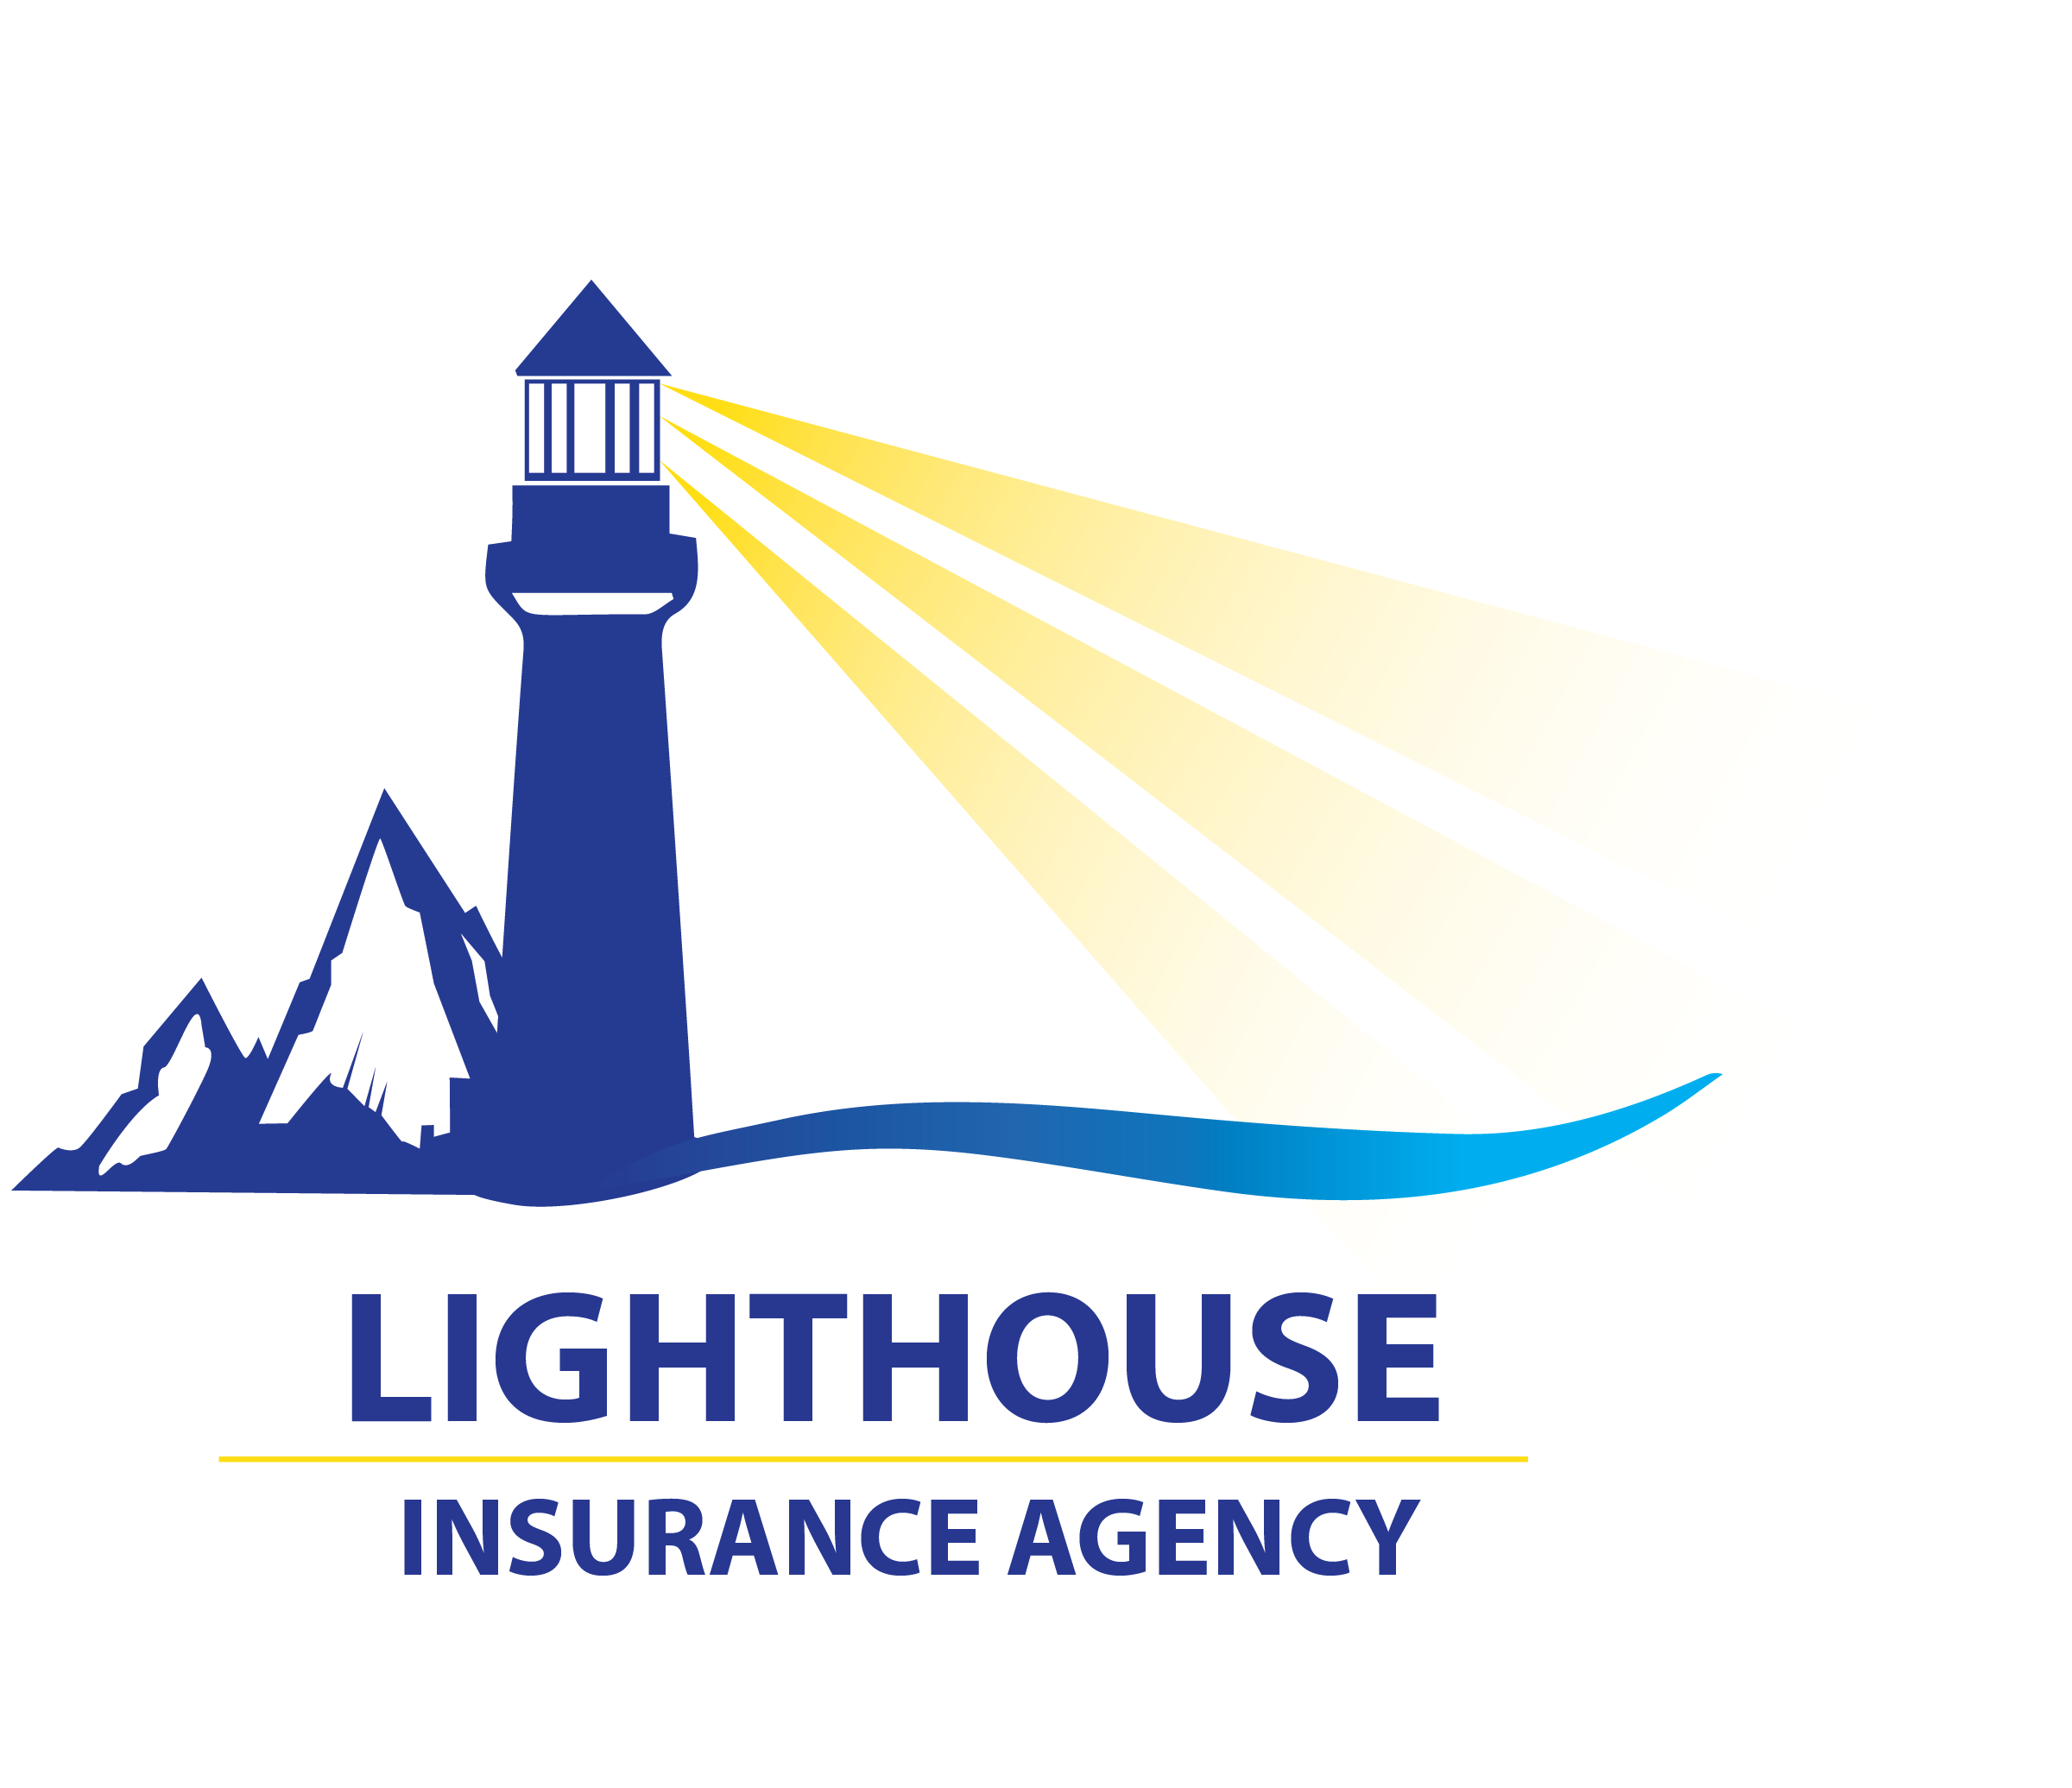 Lighthouse Insurance Agency